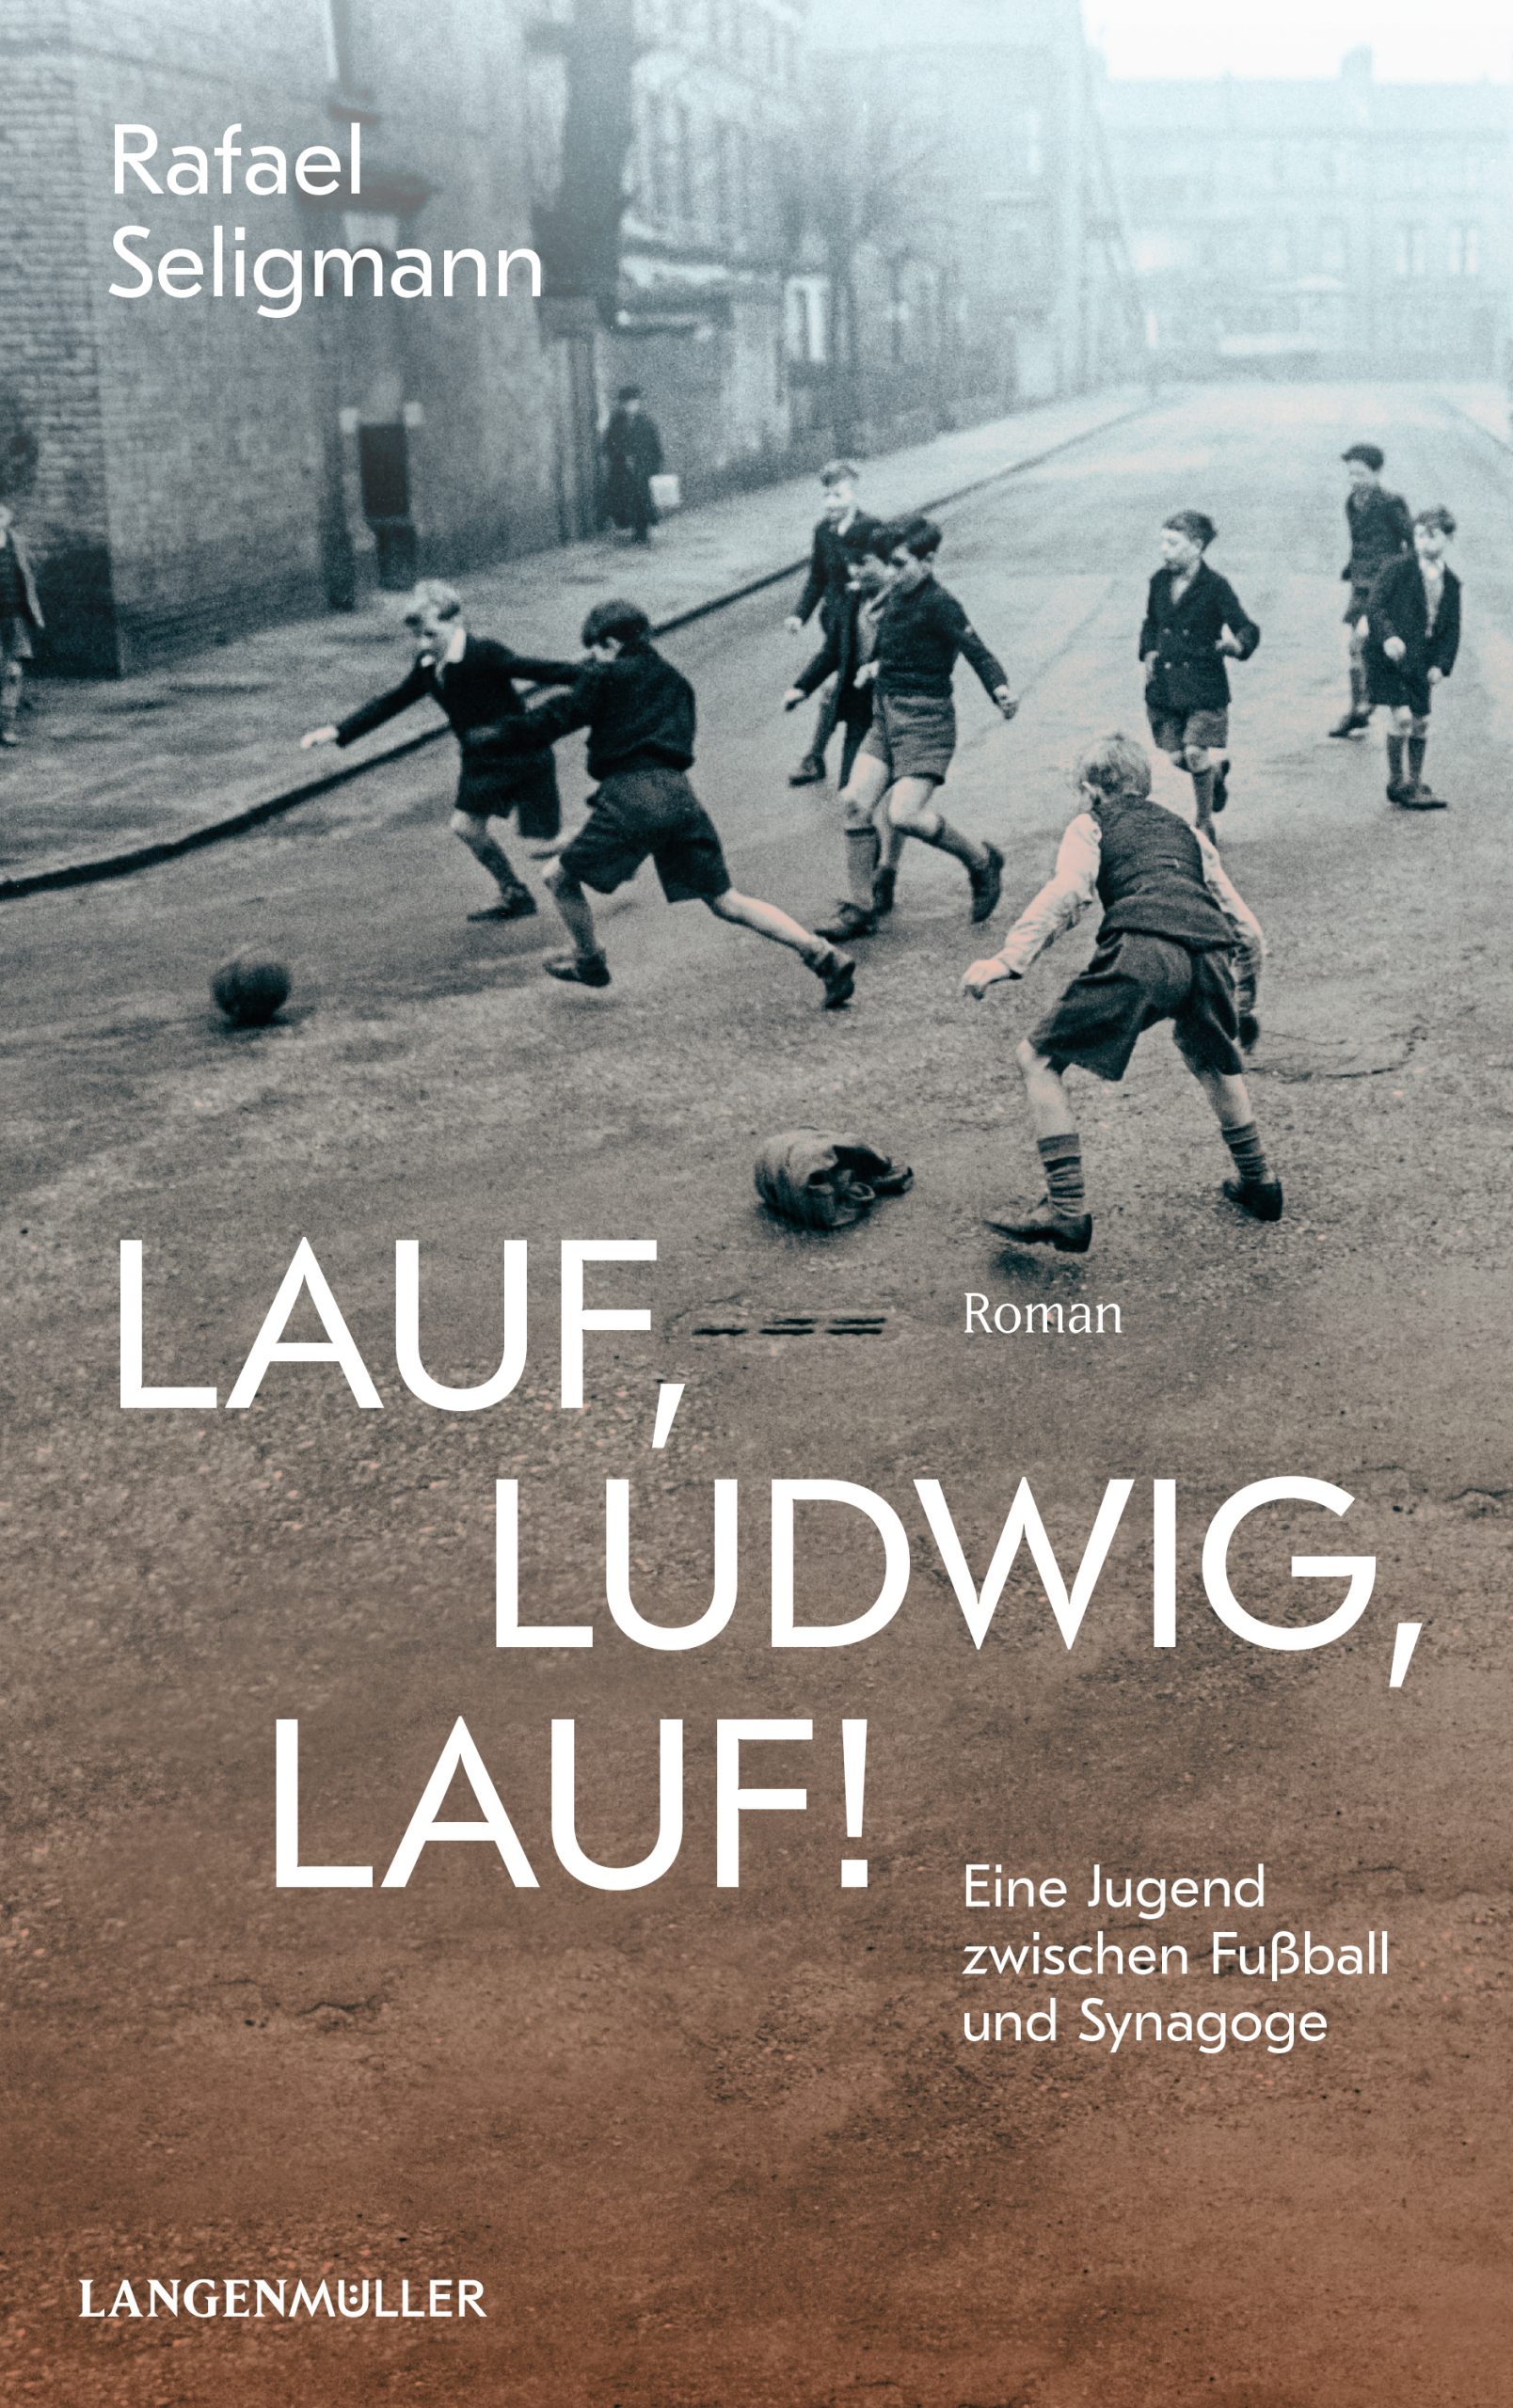 Lauf, Ludwig, lauf! von Rafael Seligmann Parkbuchhandlung Buchhandlung Bonn Bad Godesberg